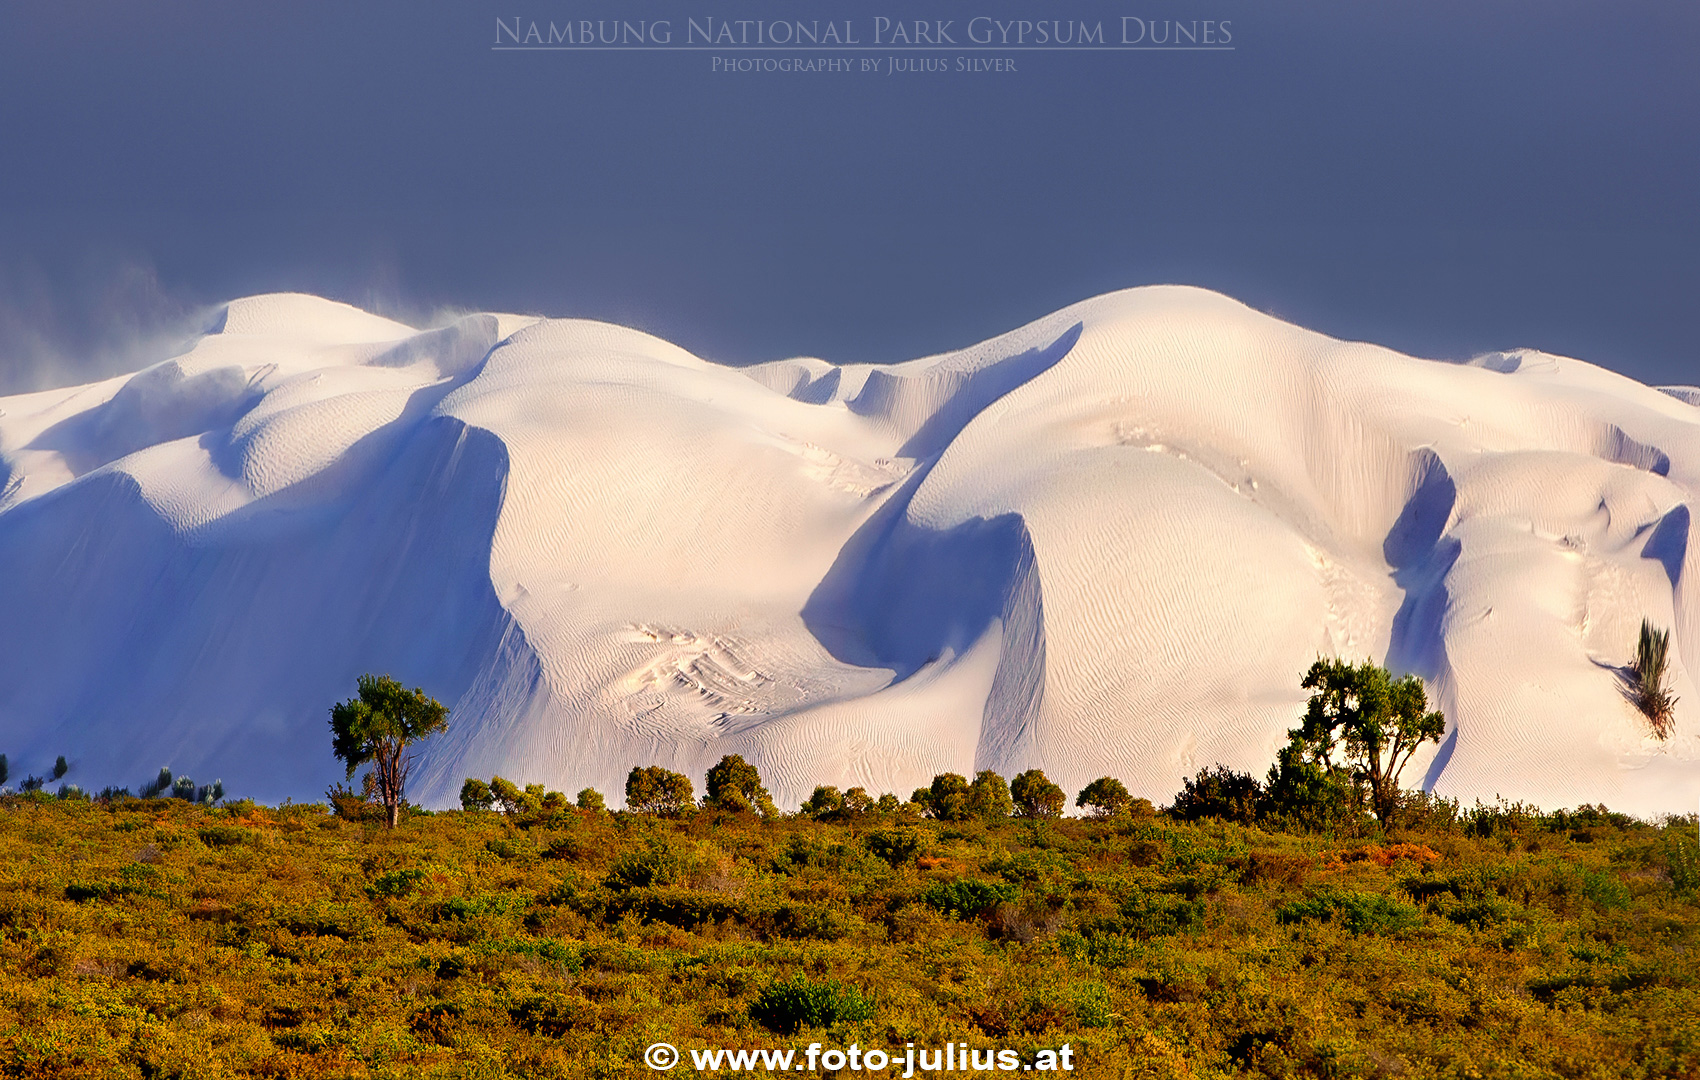 Australia_163a_Nambung_National_Park_Gypsum_Dunes.jpg, 960kB